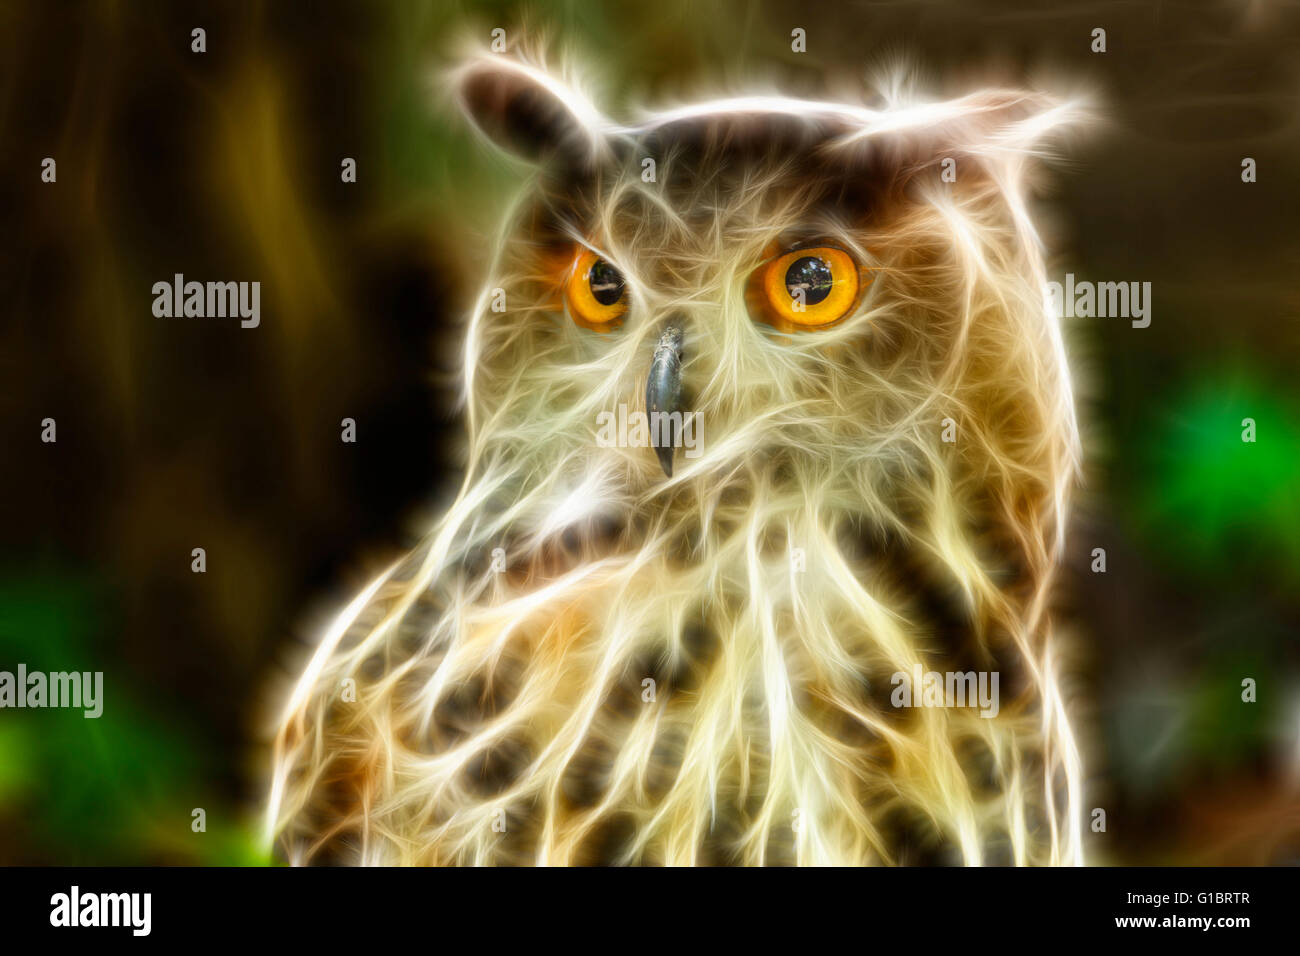 Eagle Owl/An eagle owl portrait, fractal Stock Photo